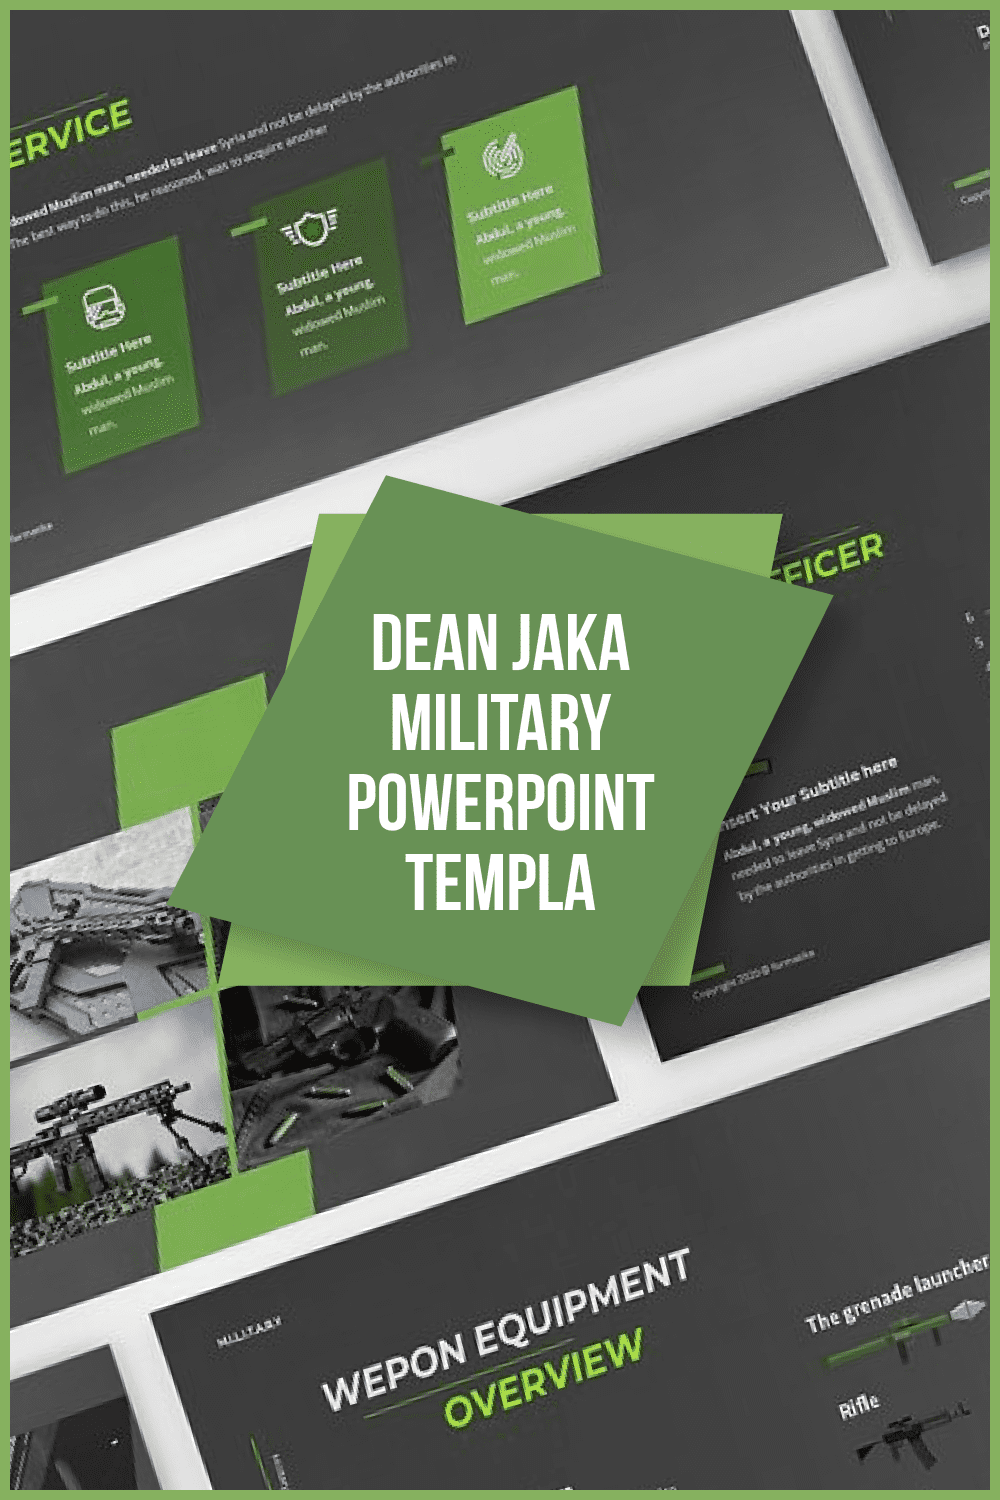 Pinterest - Dean Jaka Military Powerpoint Template.